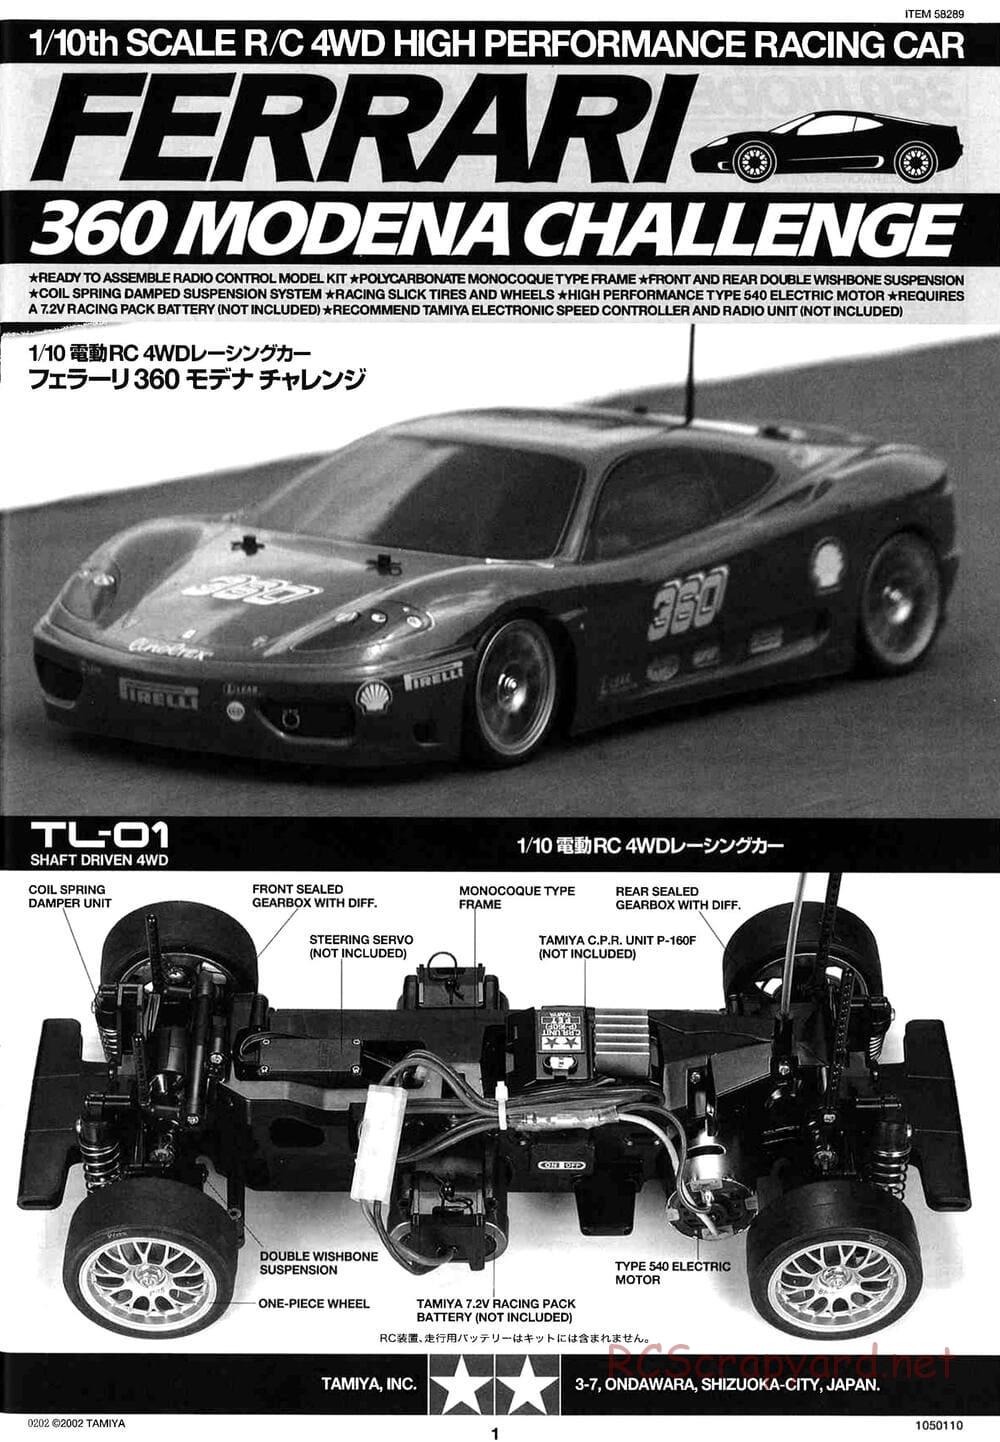 Tamiya - Ferrari 360 Modena Challenge - TL-01 Chassis - Manual - Page 1